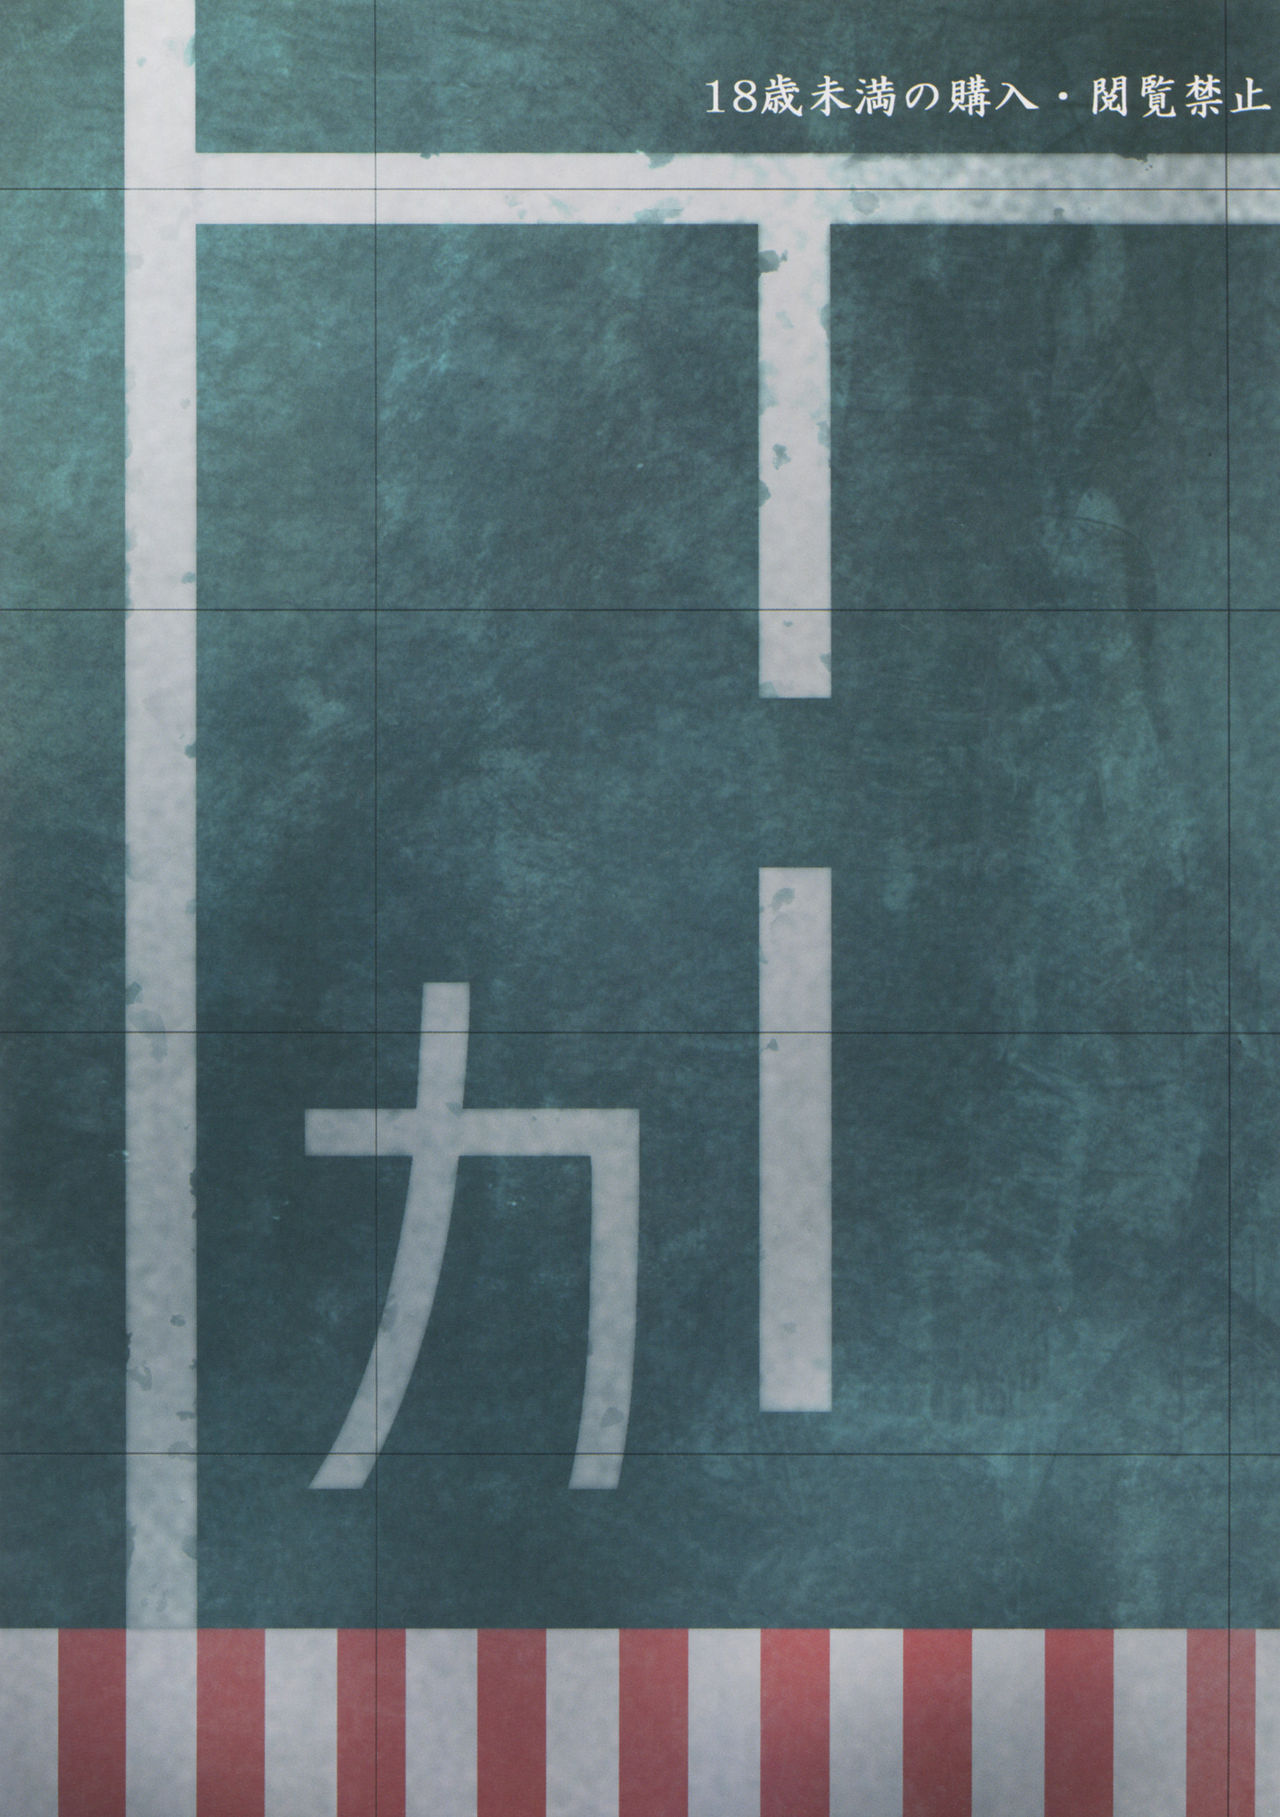 (C89) [AKKAN-Bi PROJECT (Yanagi Hirohiko)] Ka (Kantai Collection -KanColle-) (C89) [あっかんBi～ (柳ひろひこ)] カ (艦隊これくしょん -艦これ-)